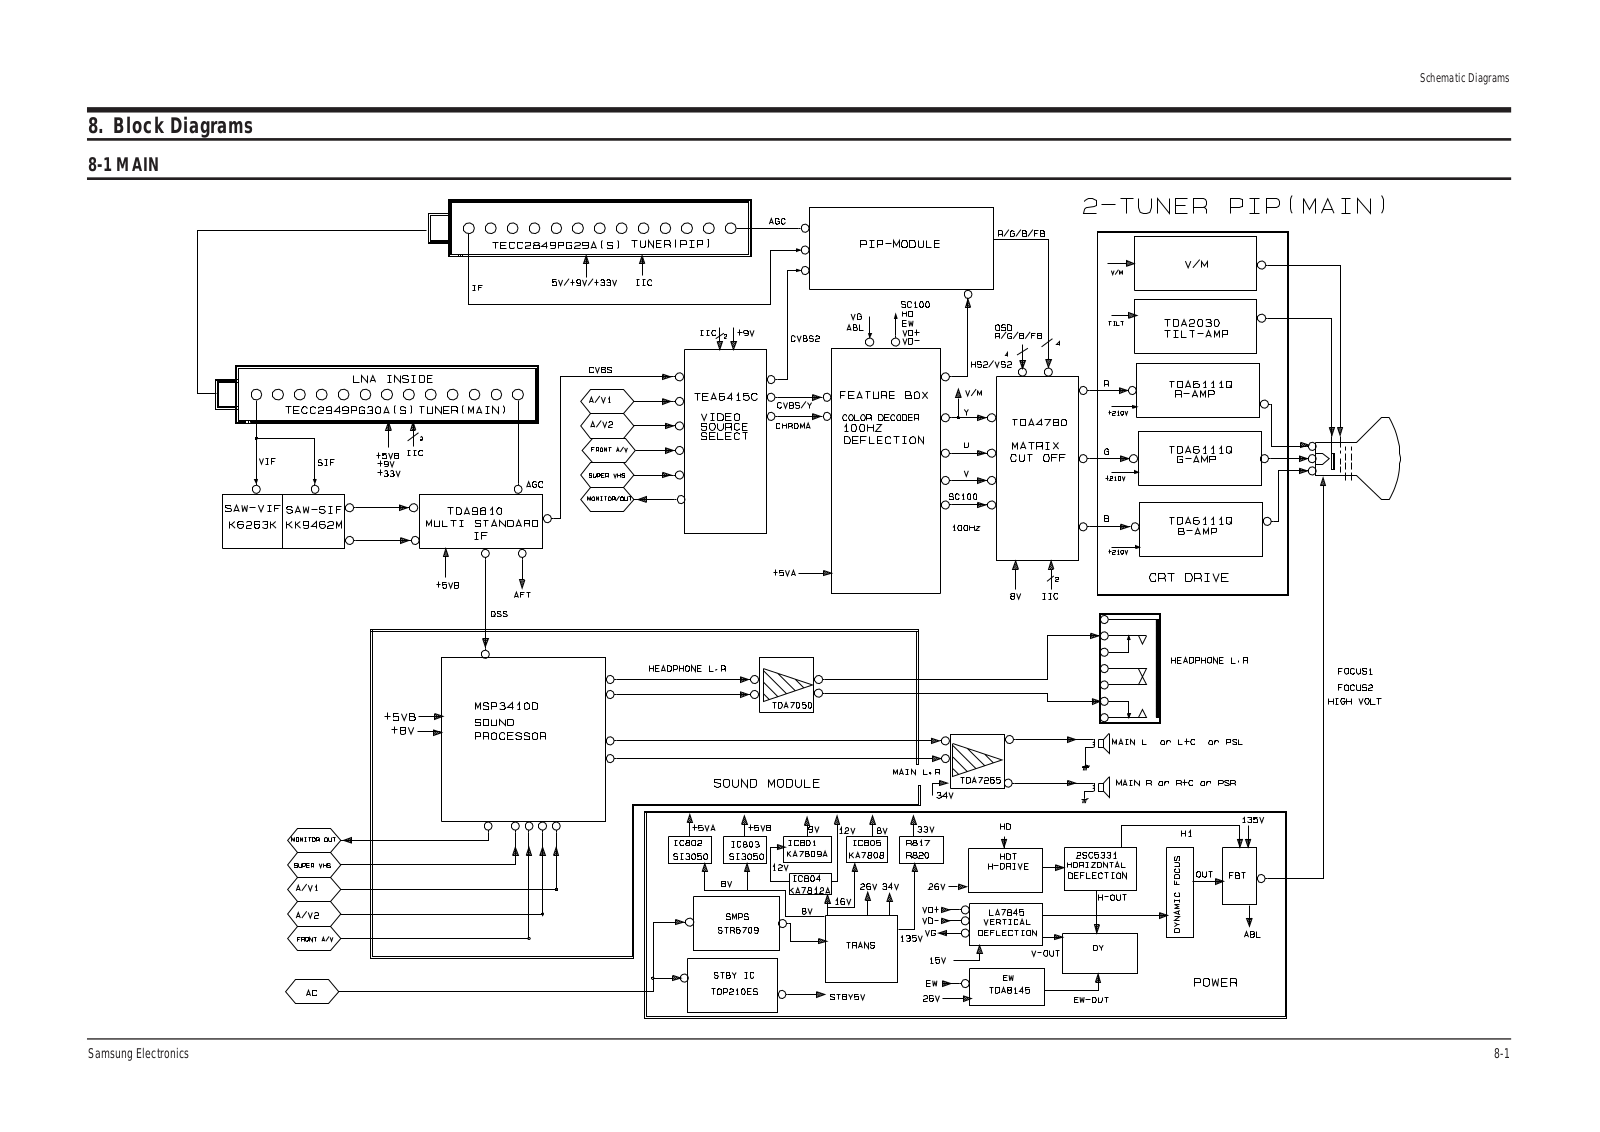 Samsung CS-29 Block Diagram